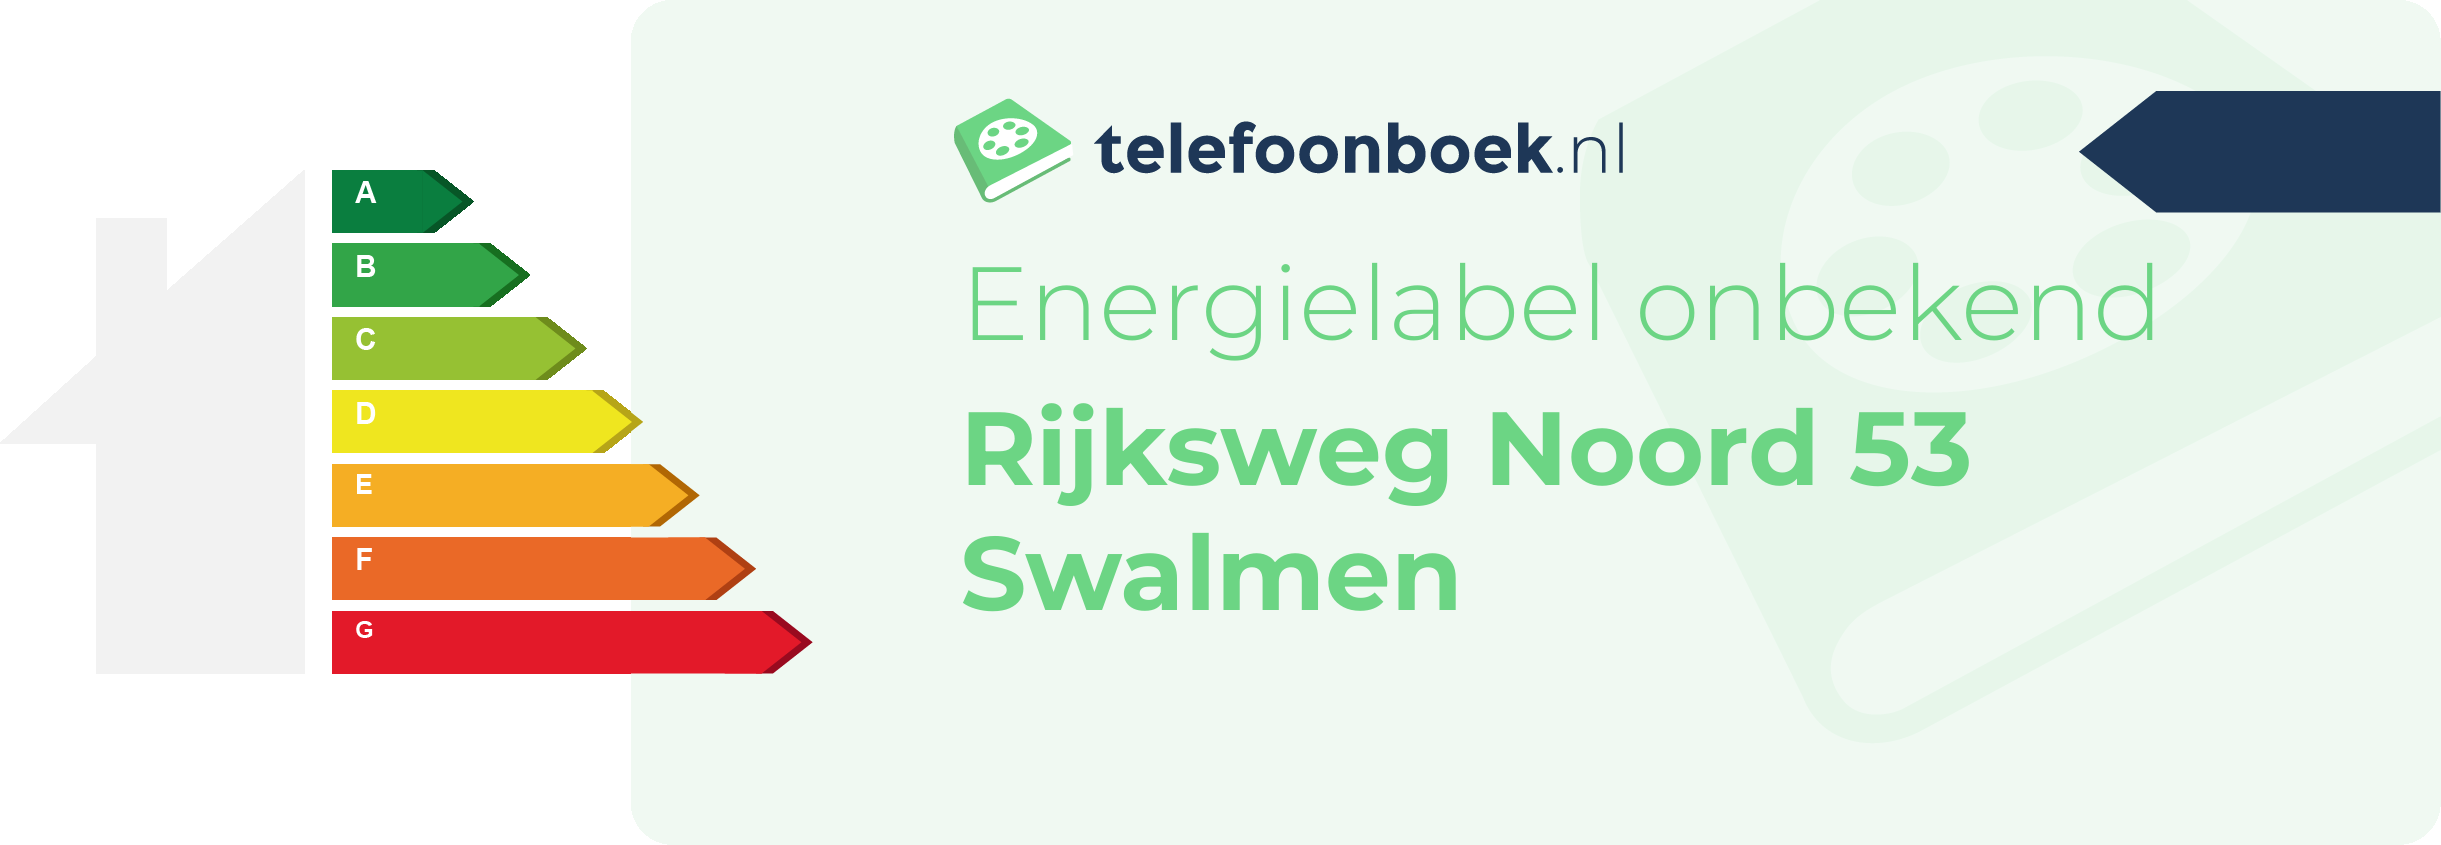 Energielabel Rijksweg Noord 53 Swalmen